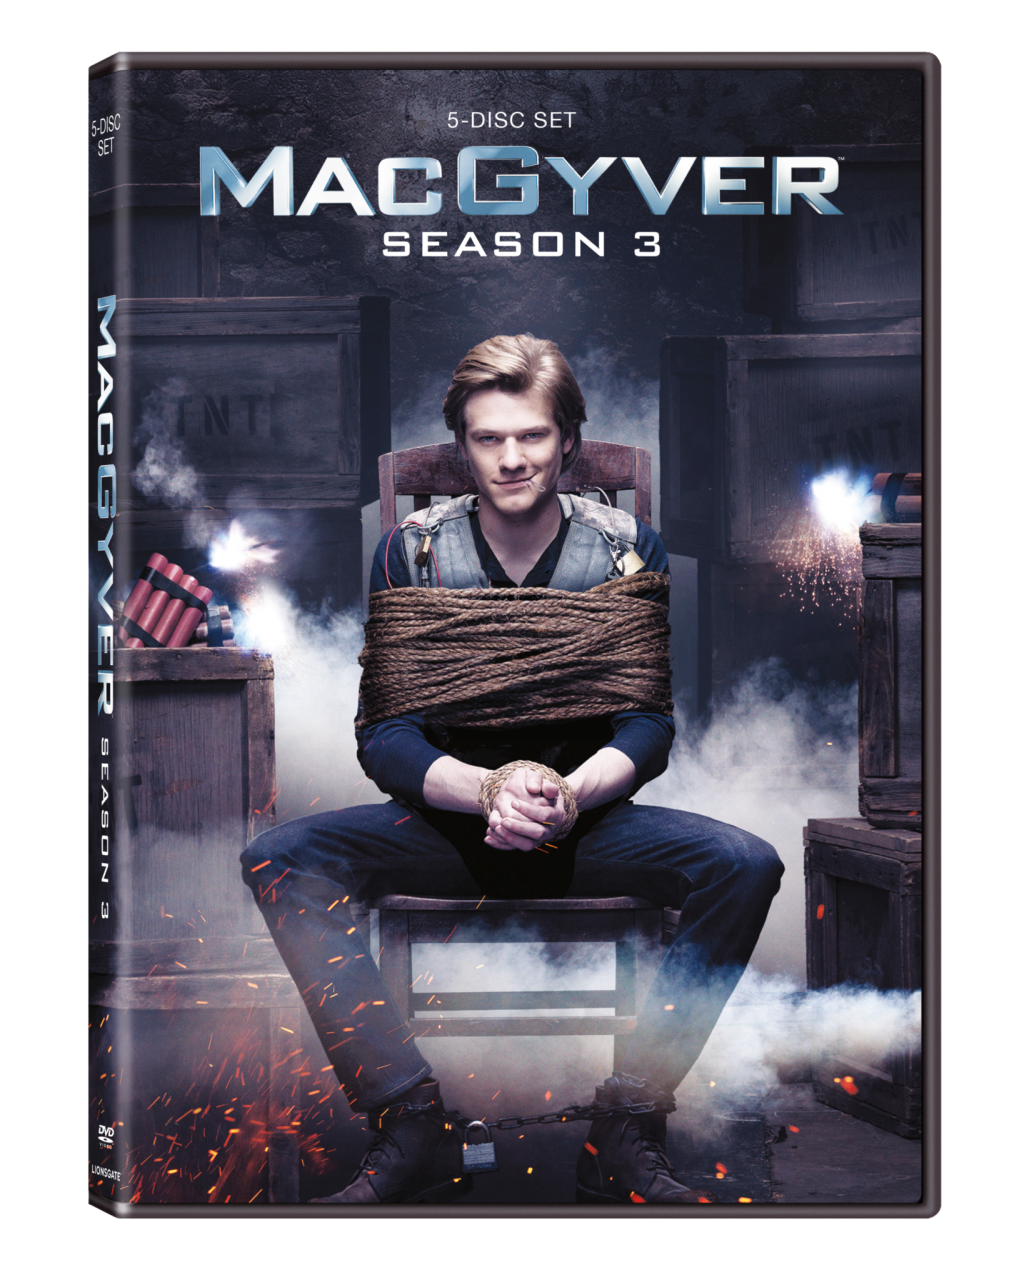 MacGyver Season 3 DVD cover (Lionsgate Home Entertainment)